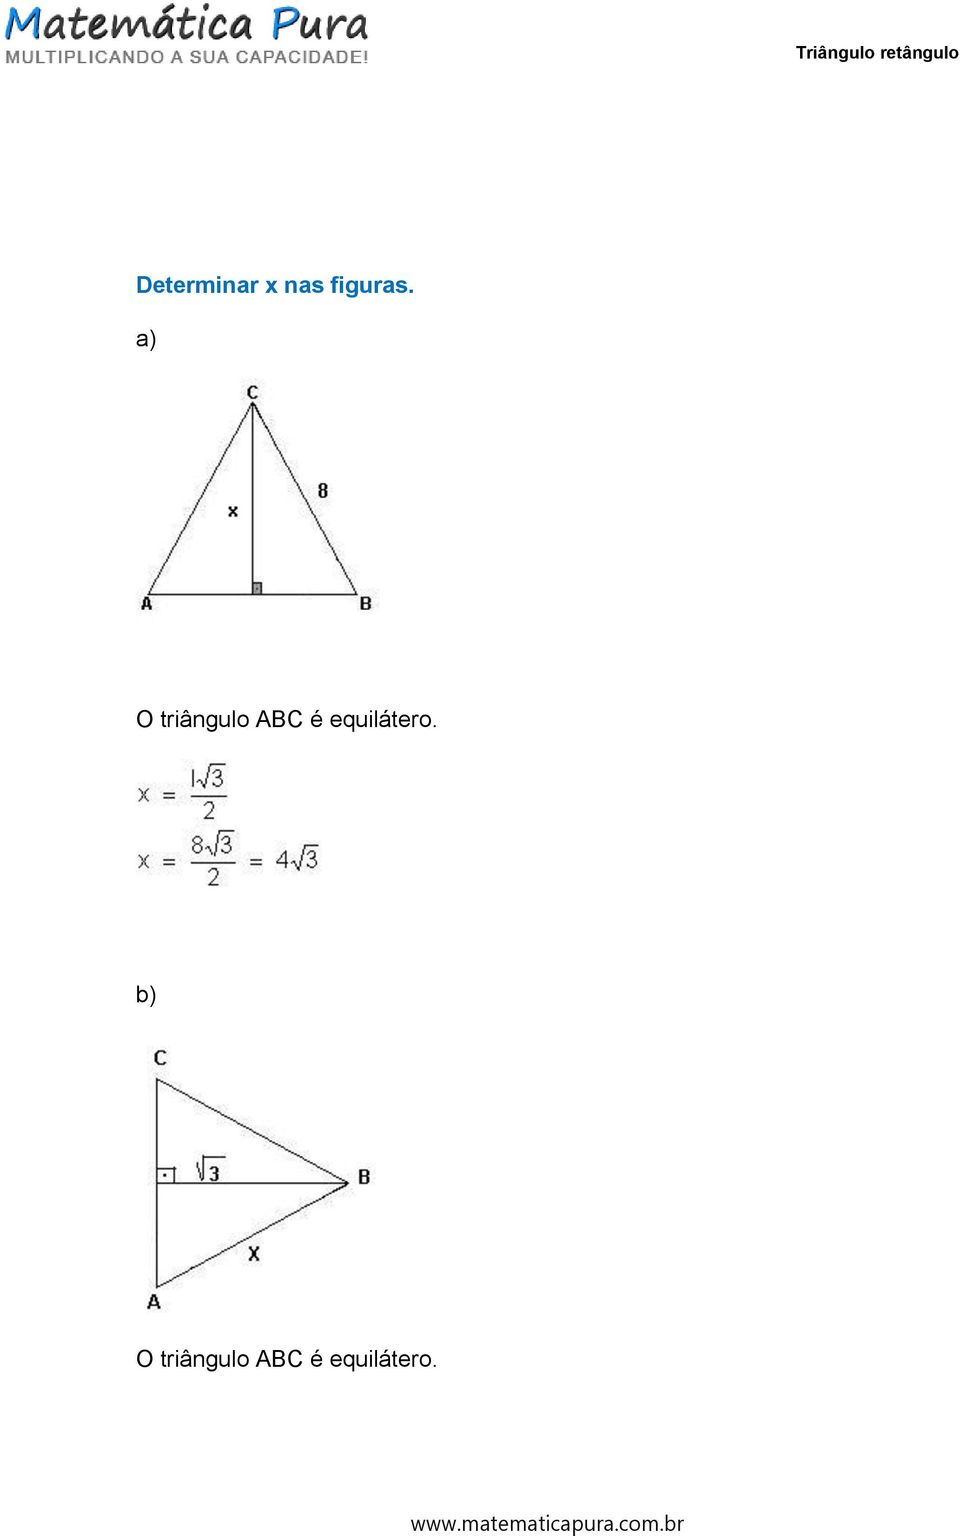 a) O triângulo ABC é